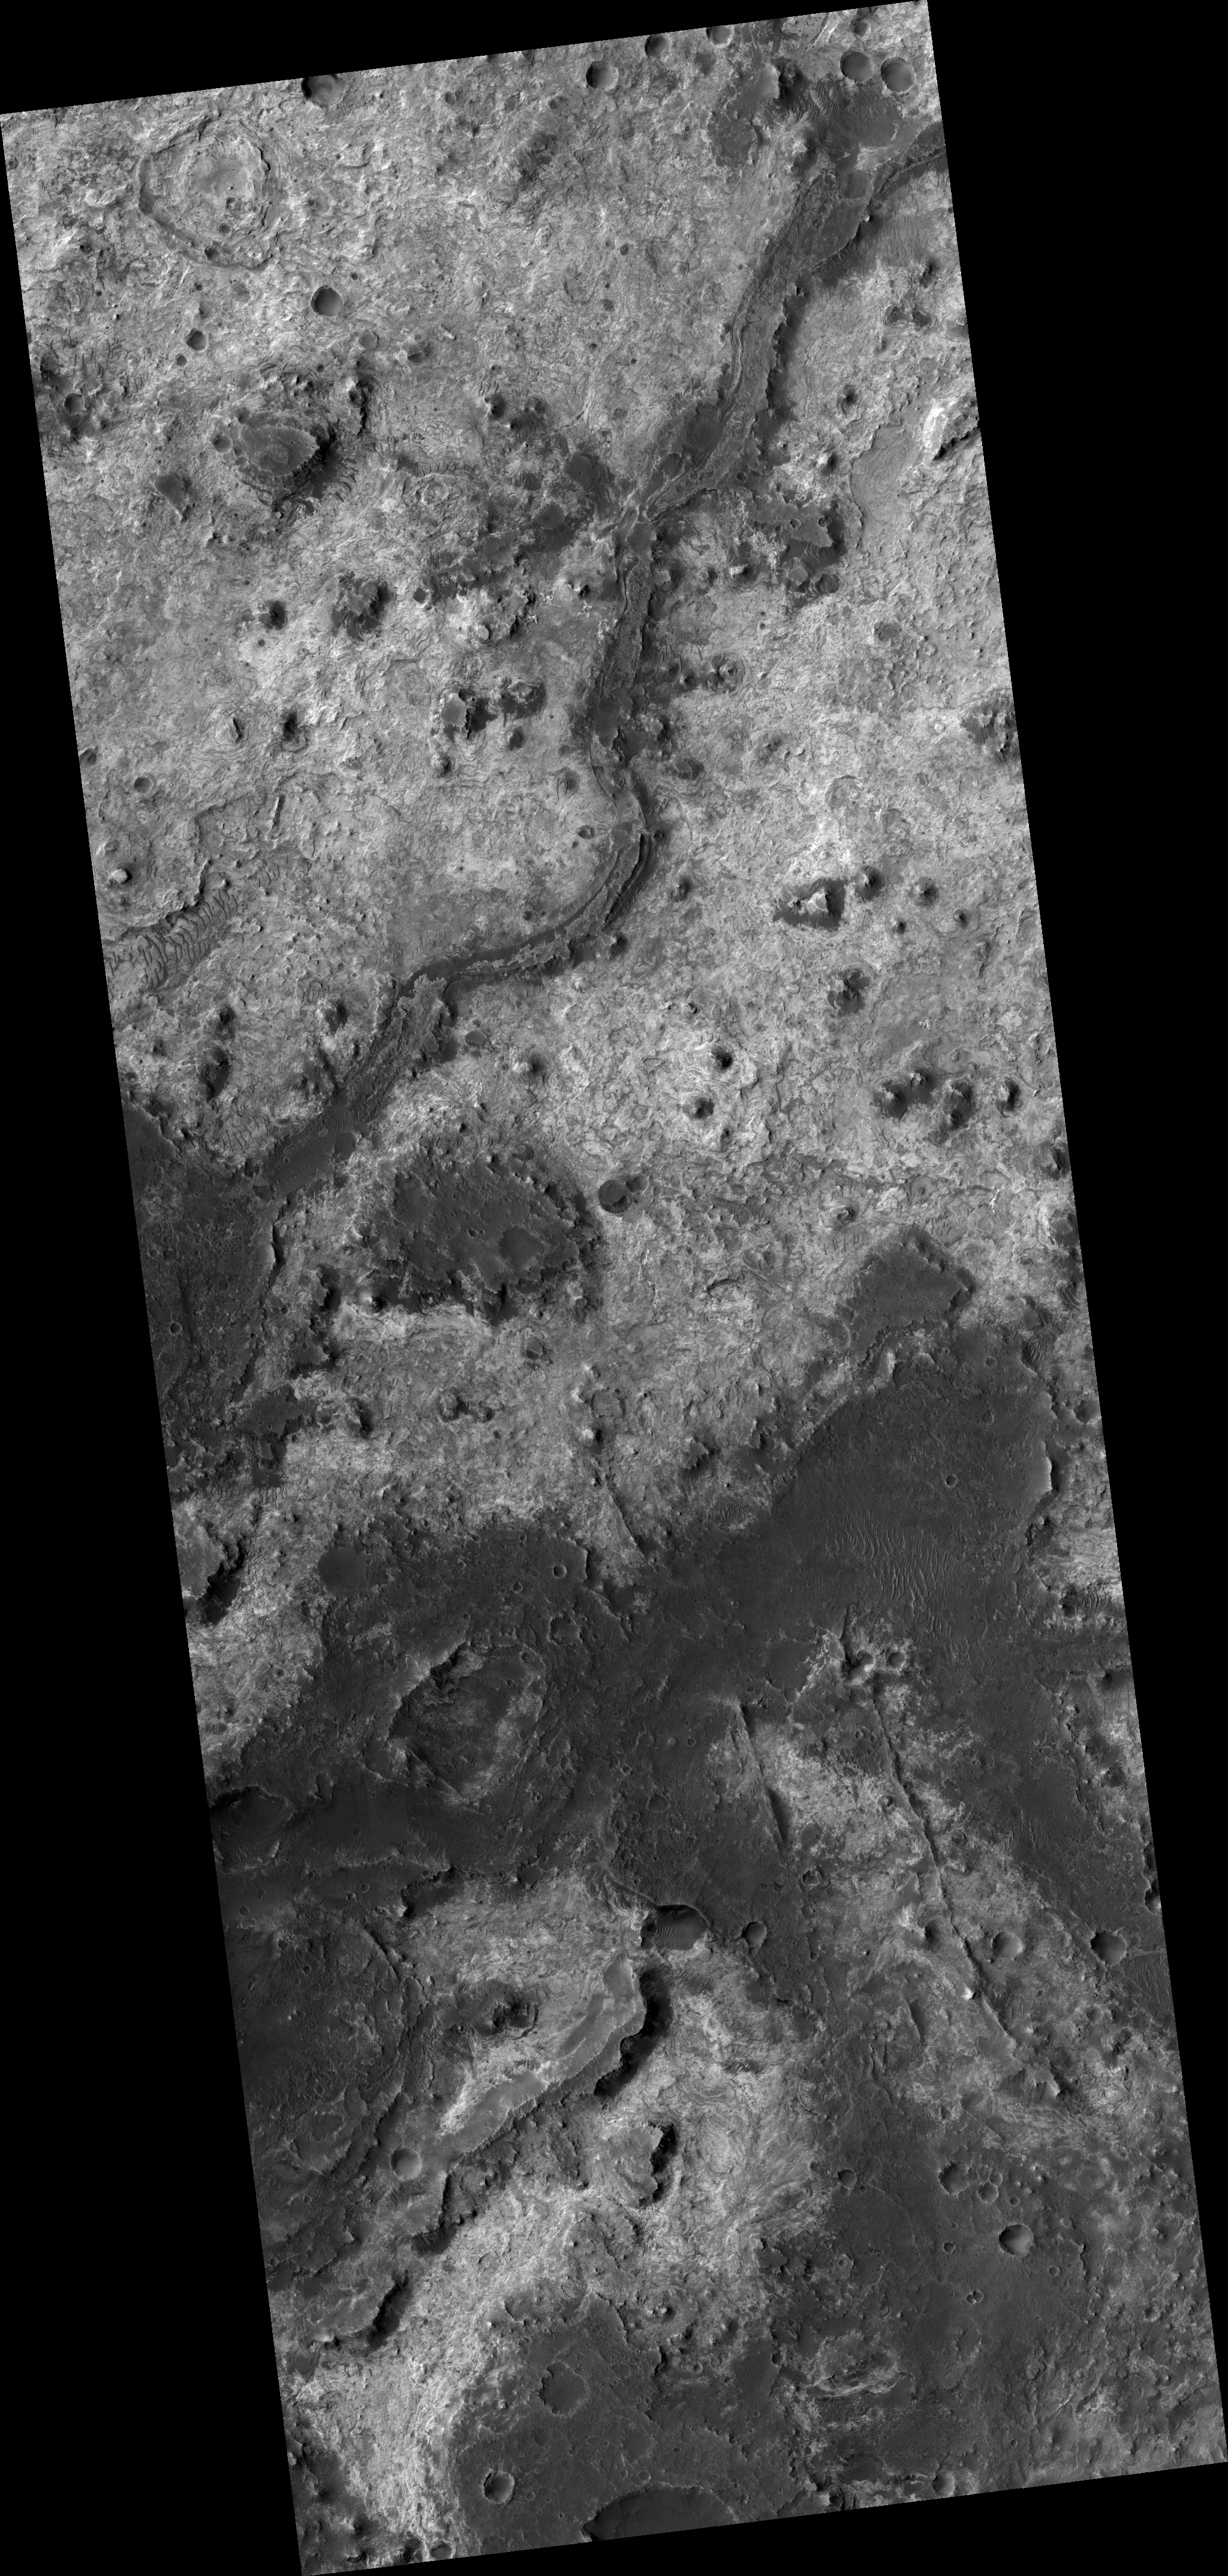 Vista della Mawrth Vallis. Credits: NASA